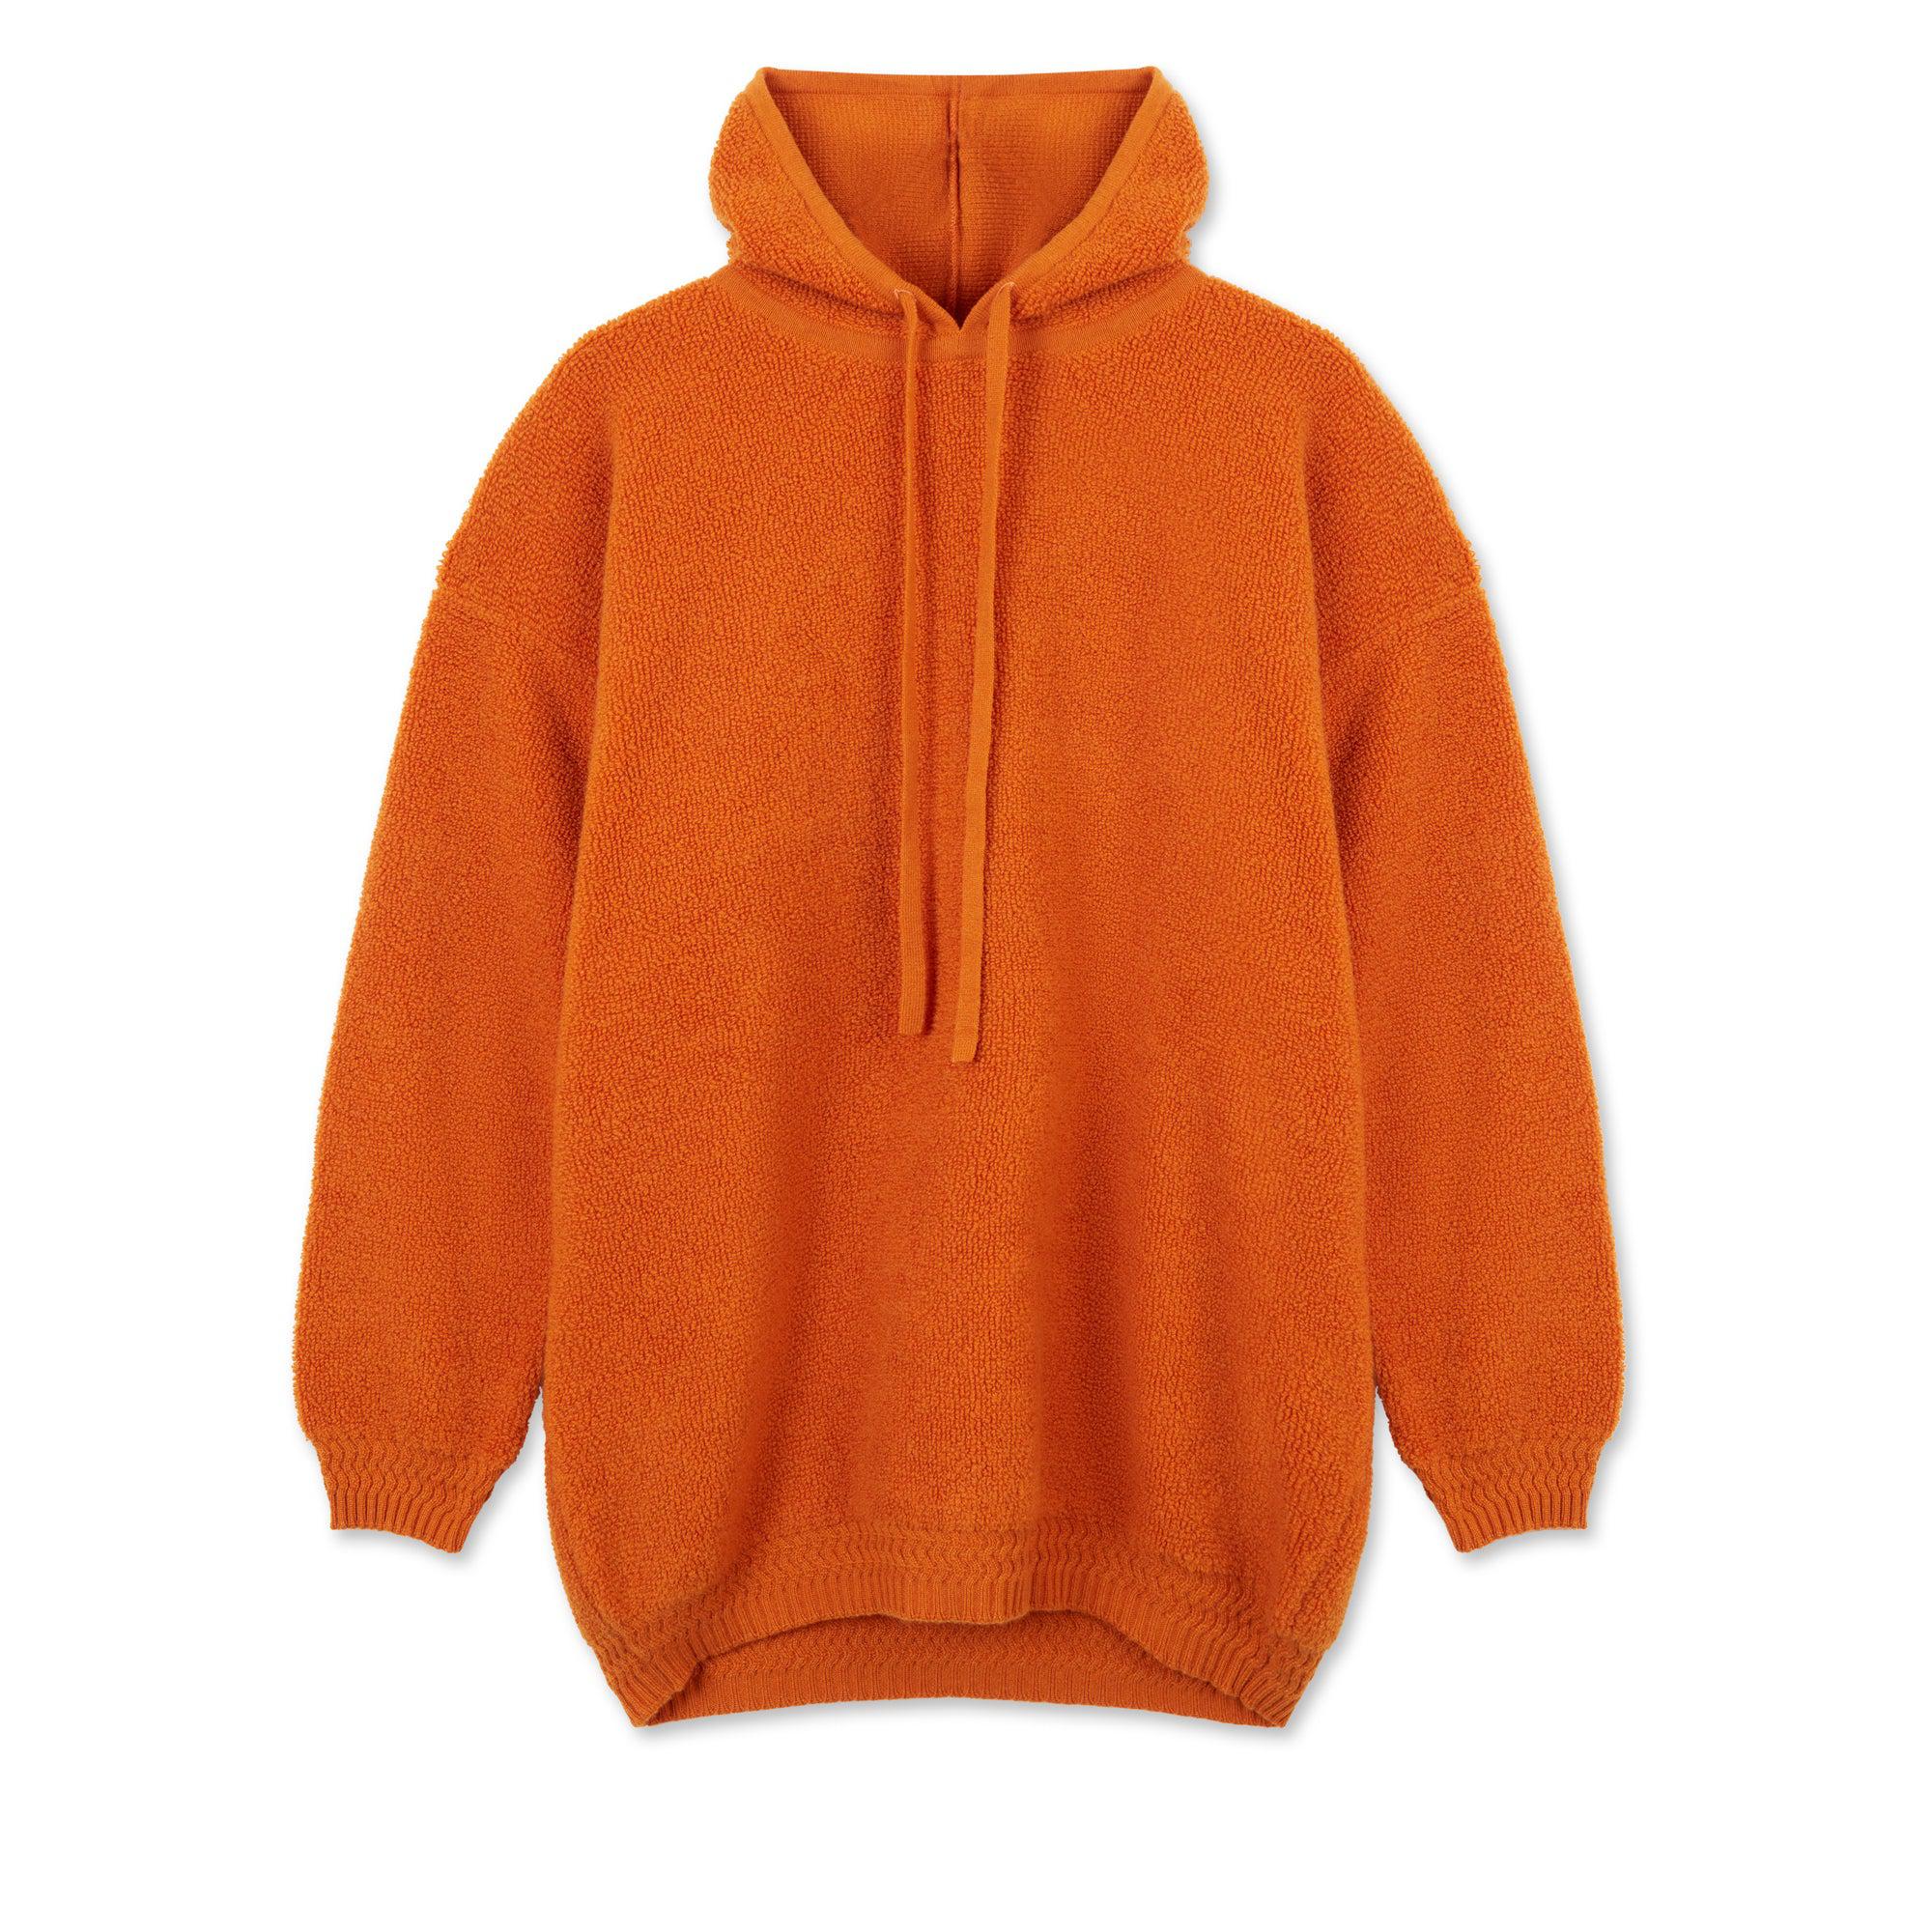 3MAN Men's Cashmere Fleece Hoodie (Orange) by 3MAN